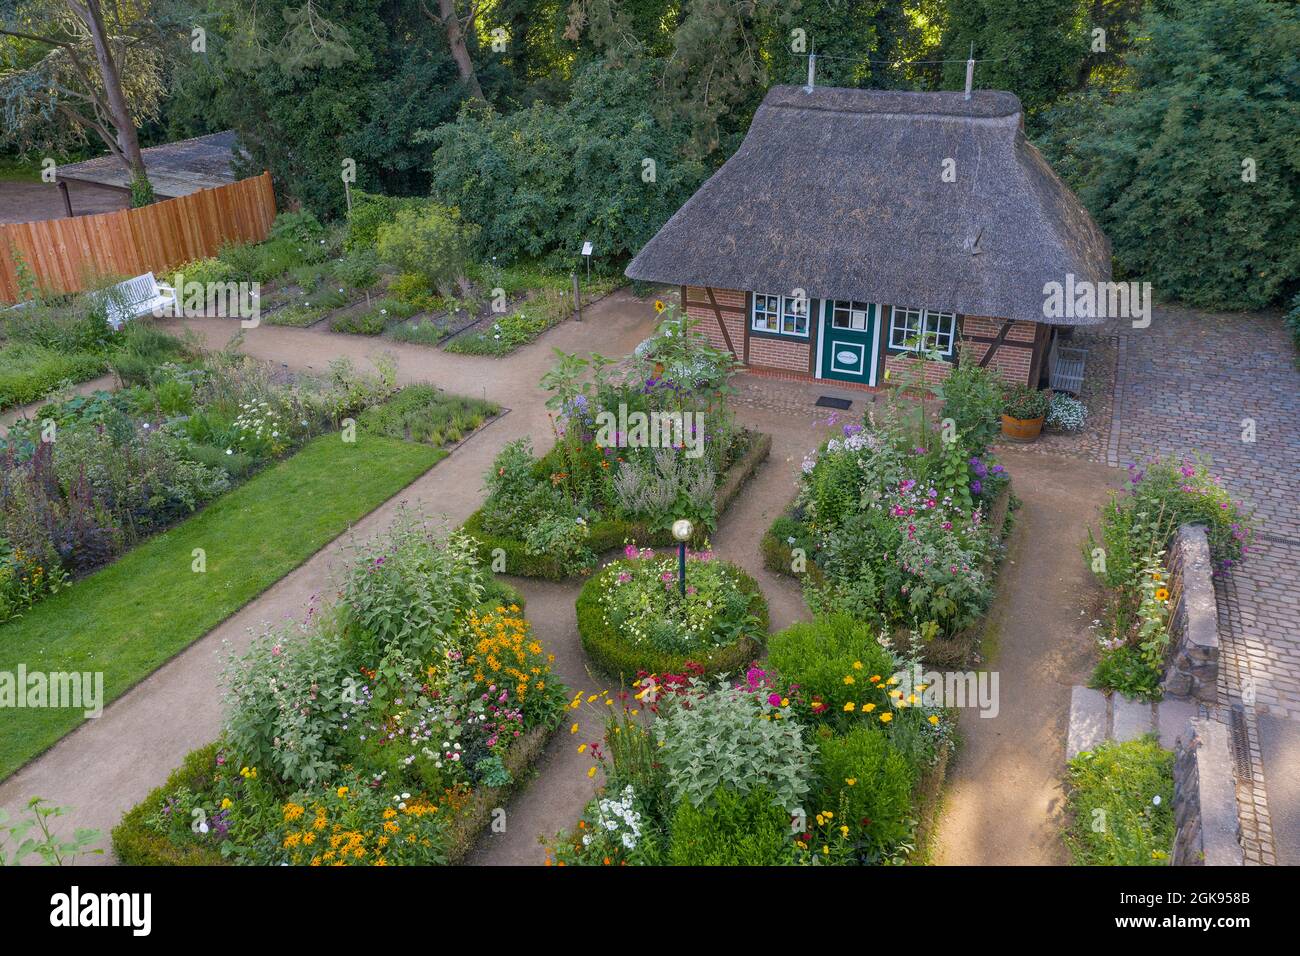 Jardines Botánicos Flottbek, jardín rural, drone foto, Alemania, Hamburgo-Flottbek Foto de stock